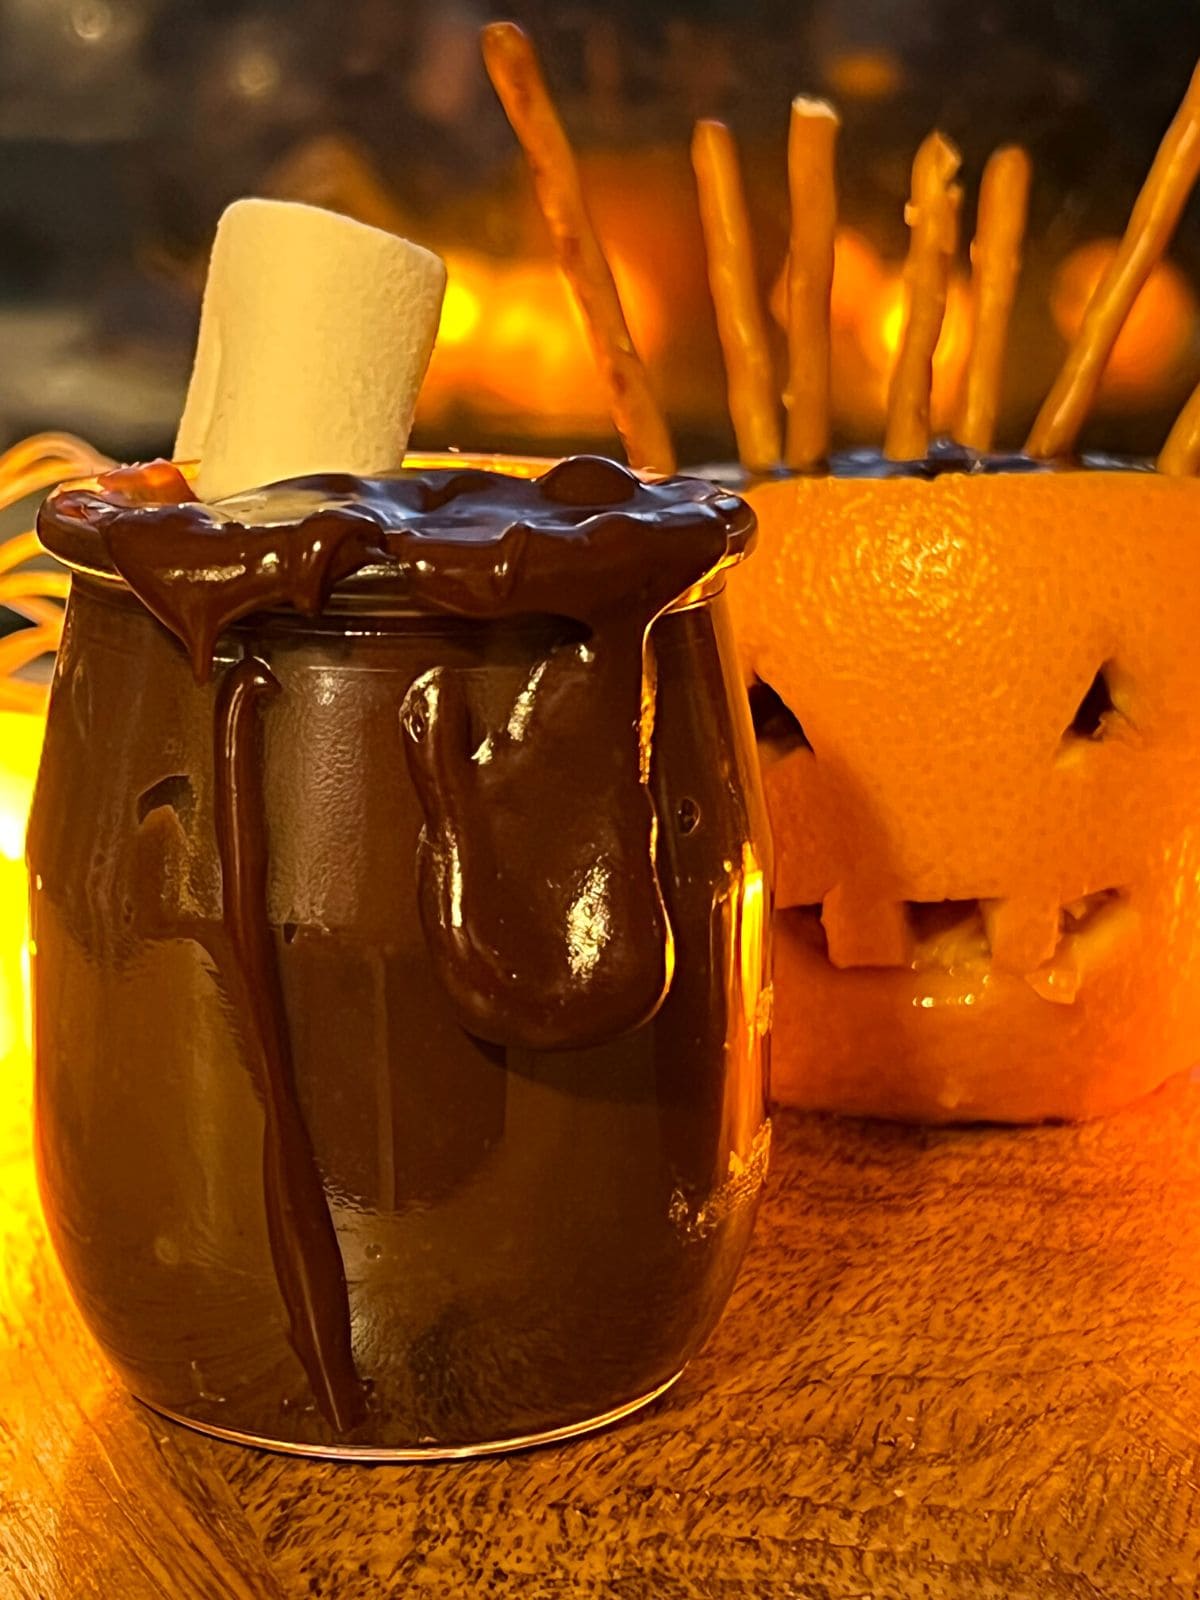 Chocolate pudding with white marshmallow next to orange jack-o-lantern.